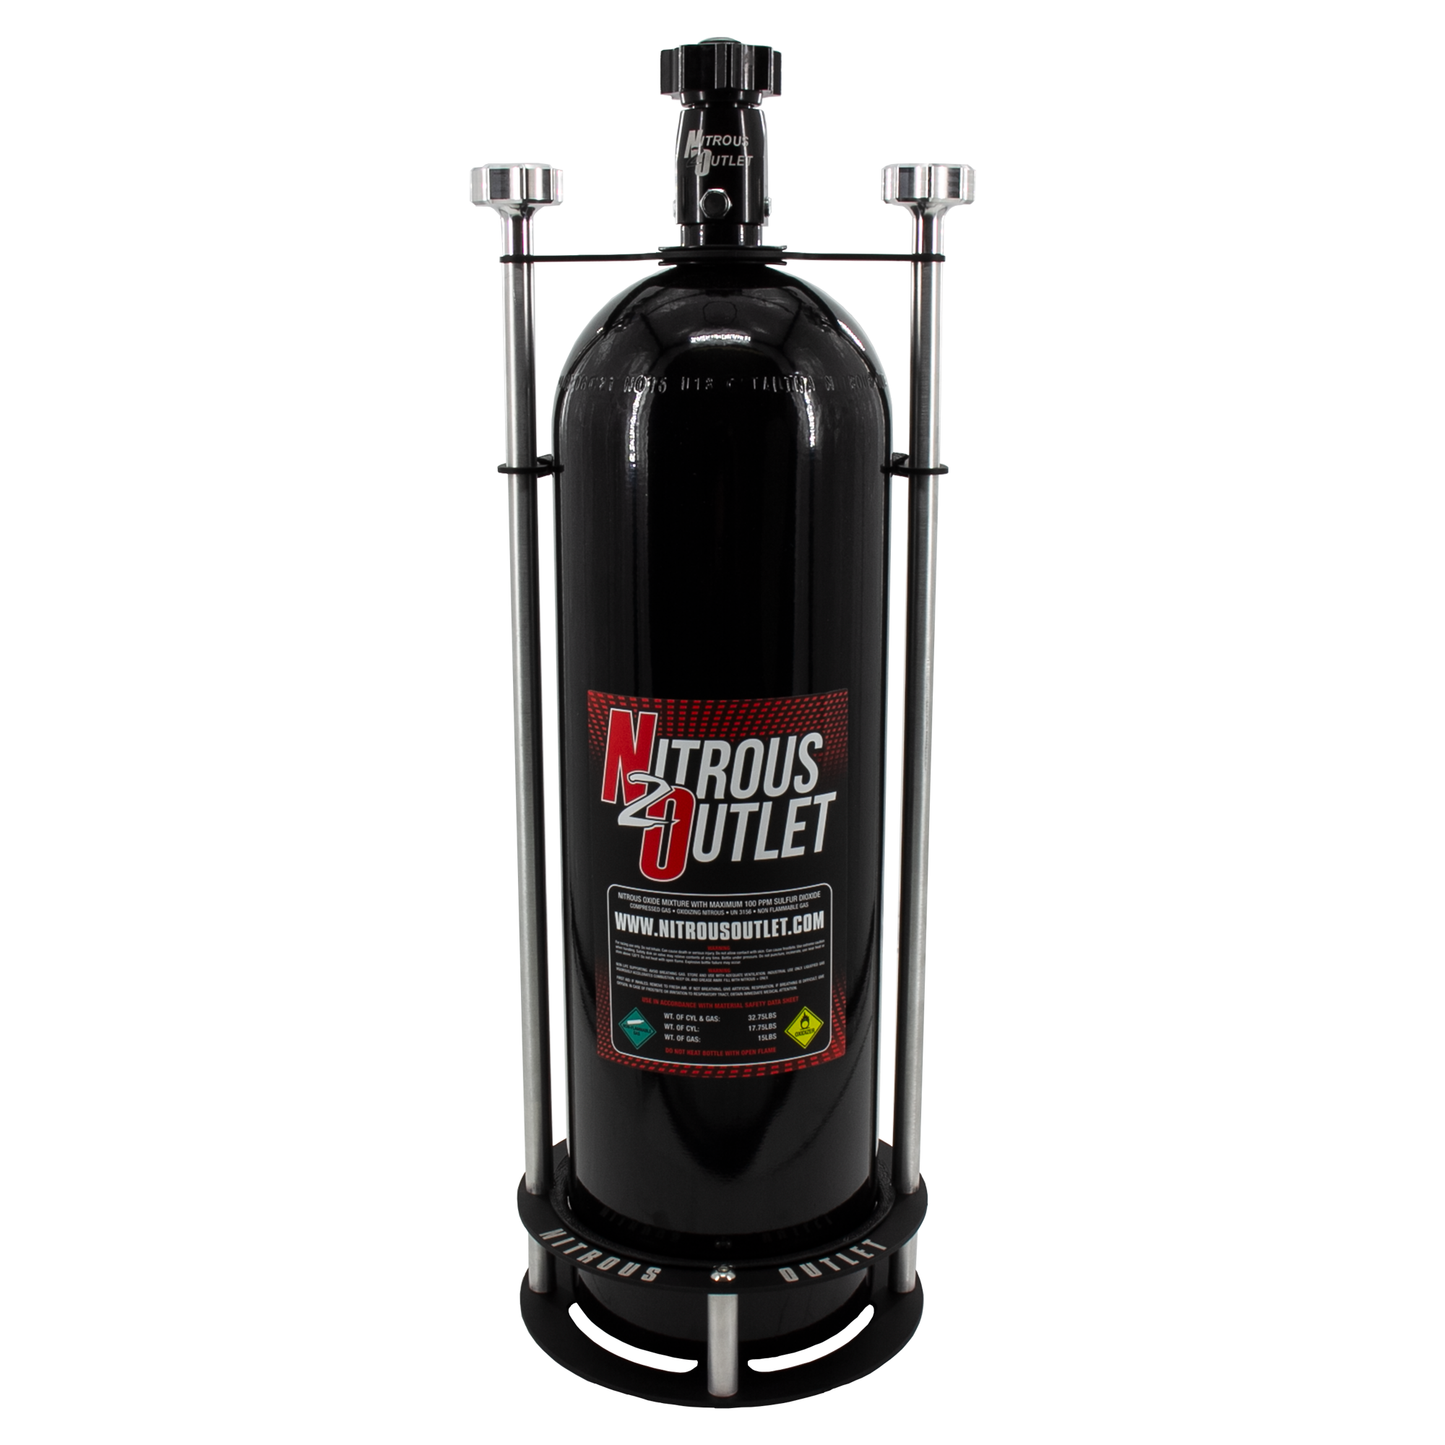 Nitrous Outlet Race-Light Single 15lb Bottle Bracket - Roll Bar Mount